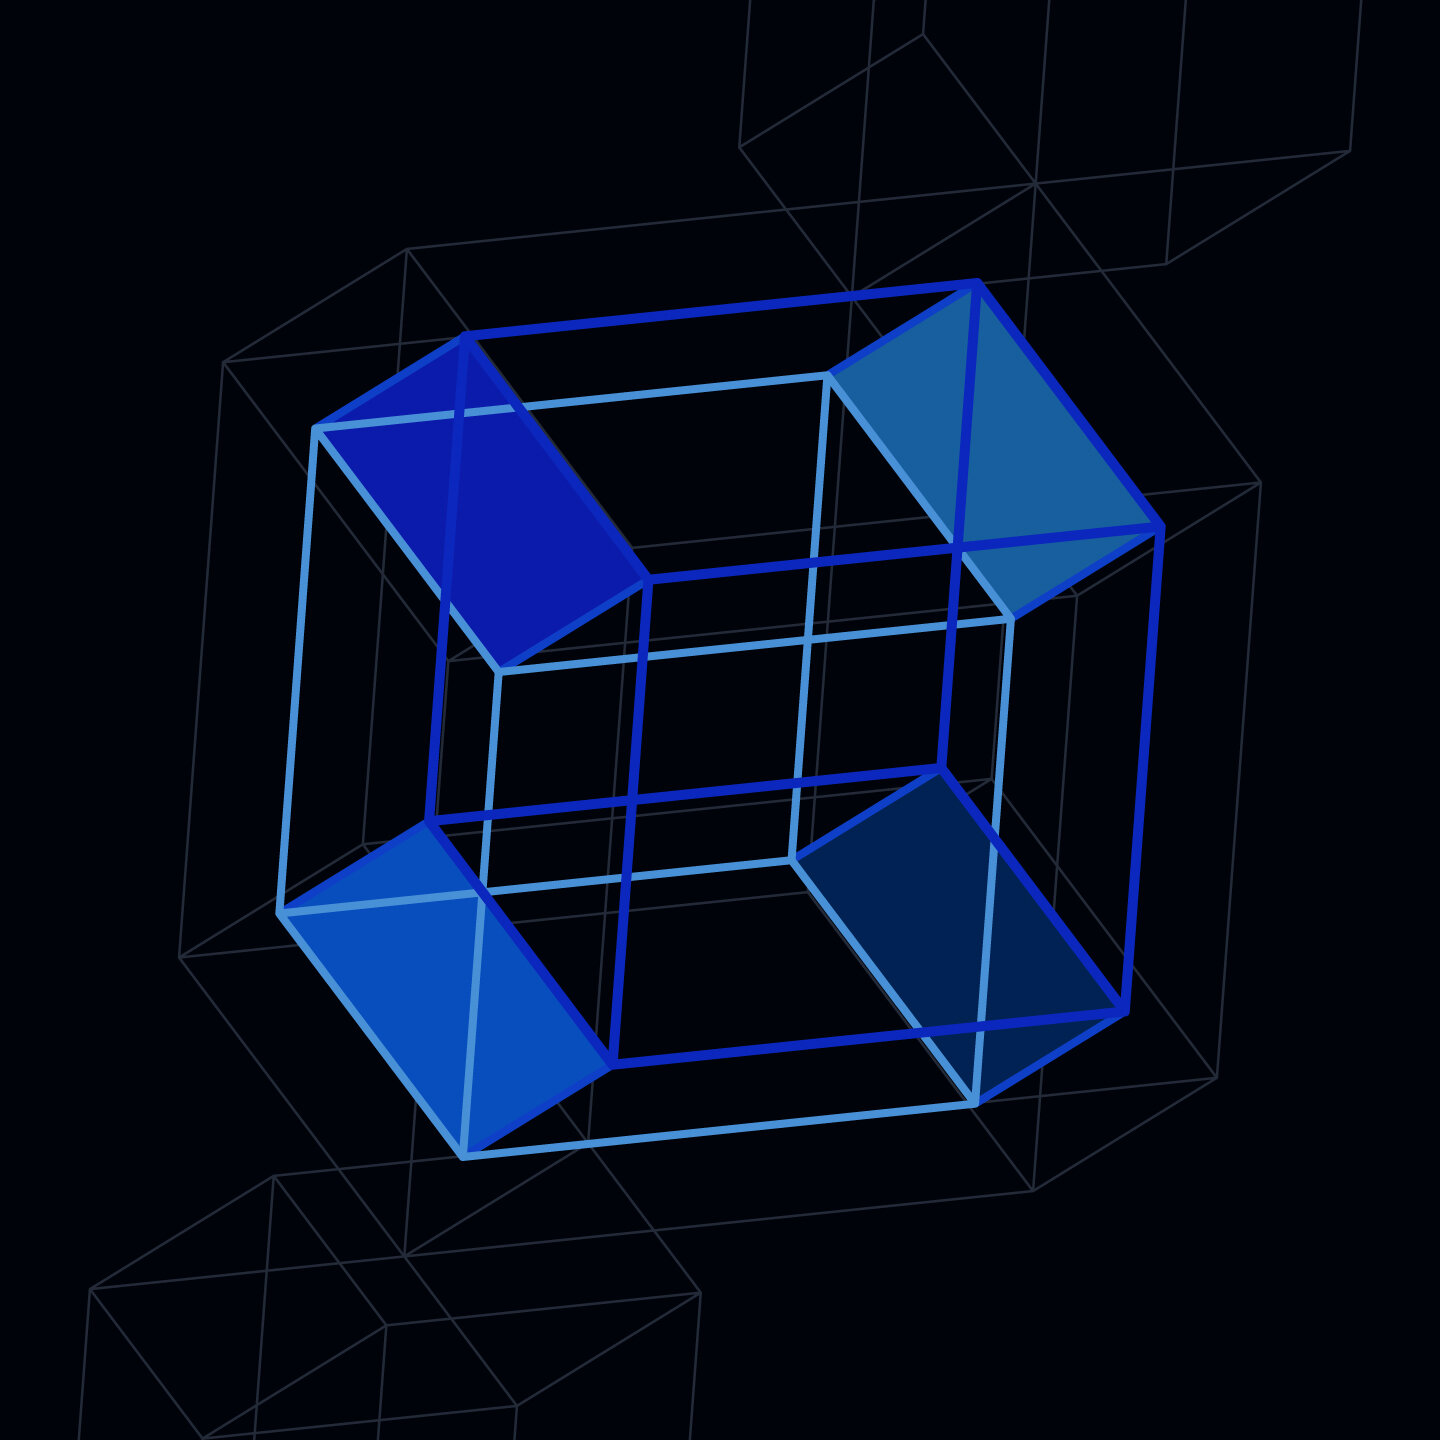 20200517_hypercube-spaces_1-big-cube_2-small-cubes_in-4d_4-fields_center-3-black.jpg